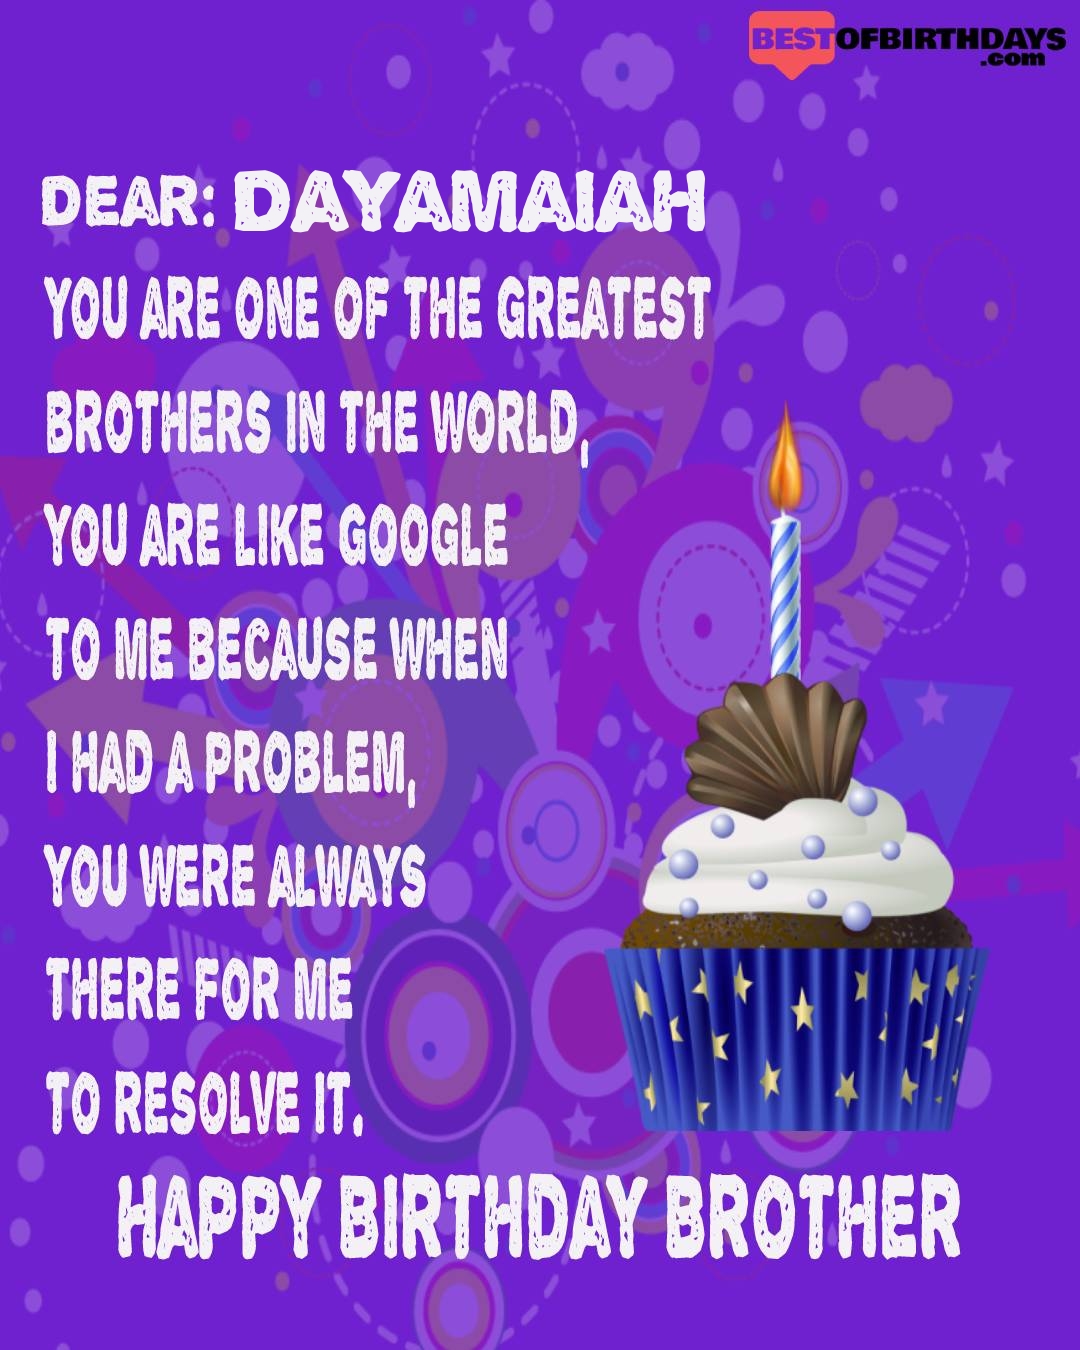 Happy birthday dayamaiah bhai brother bro